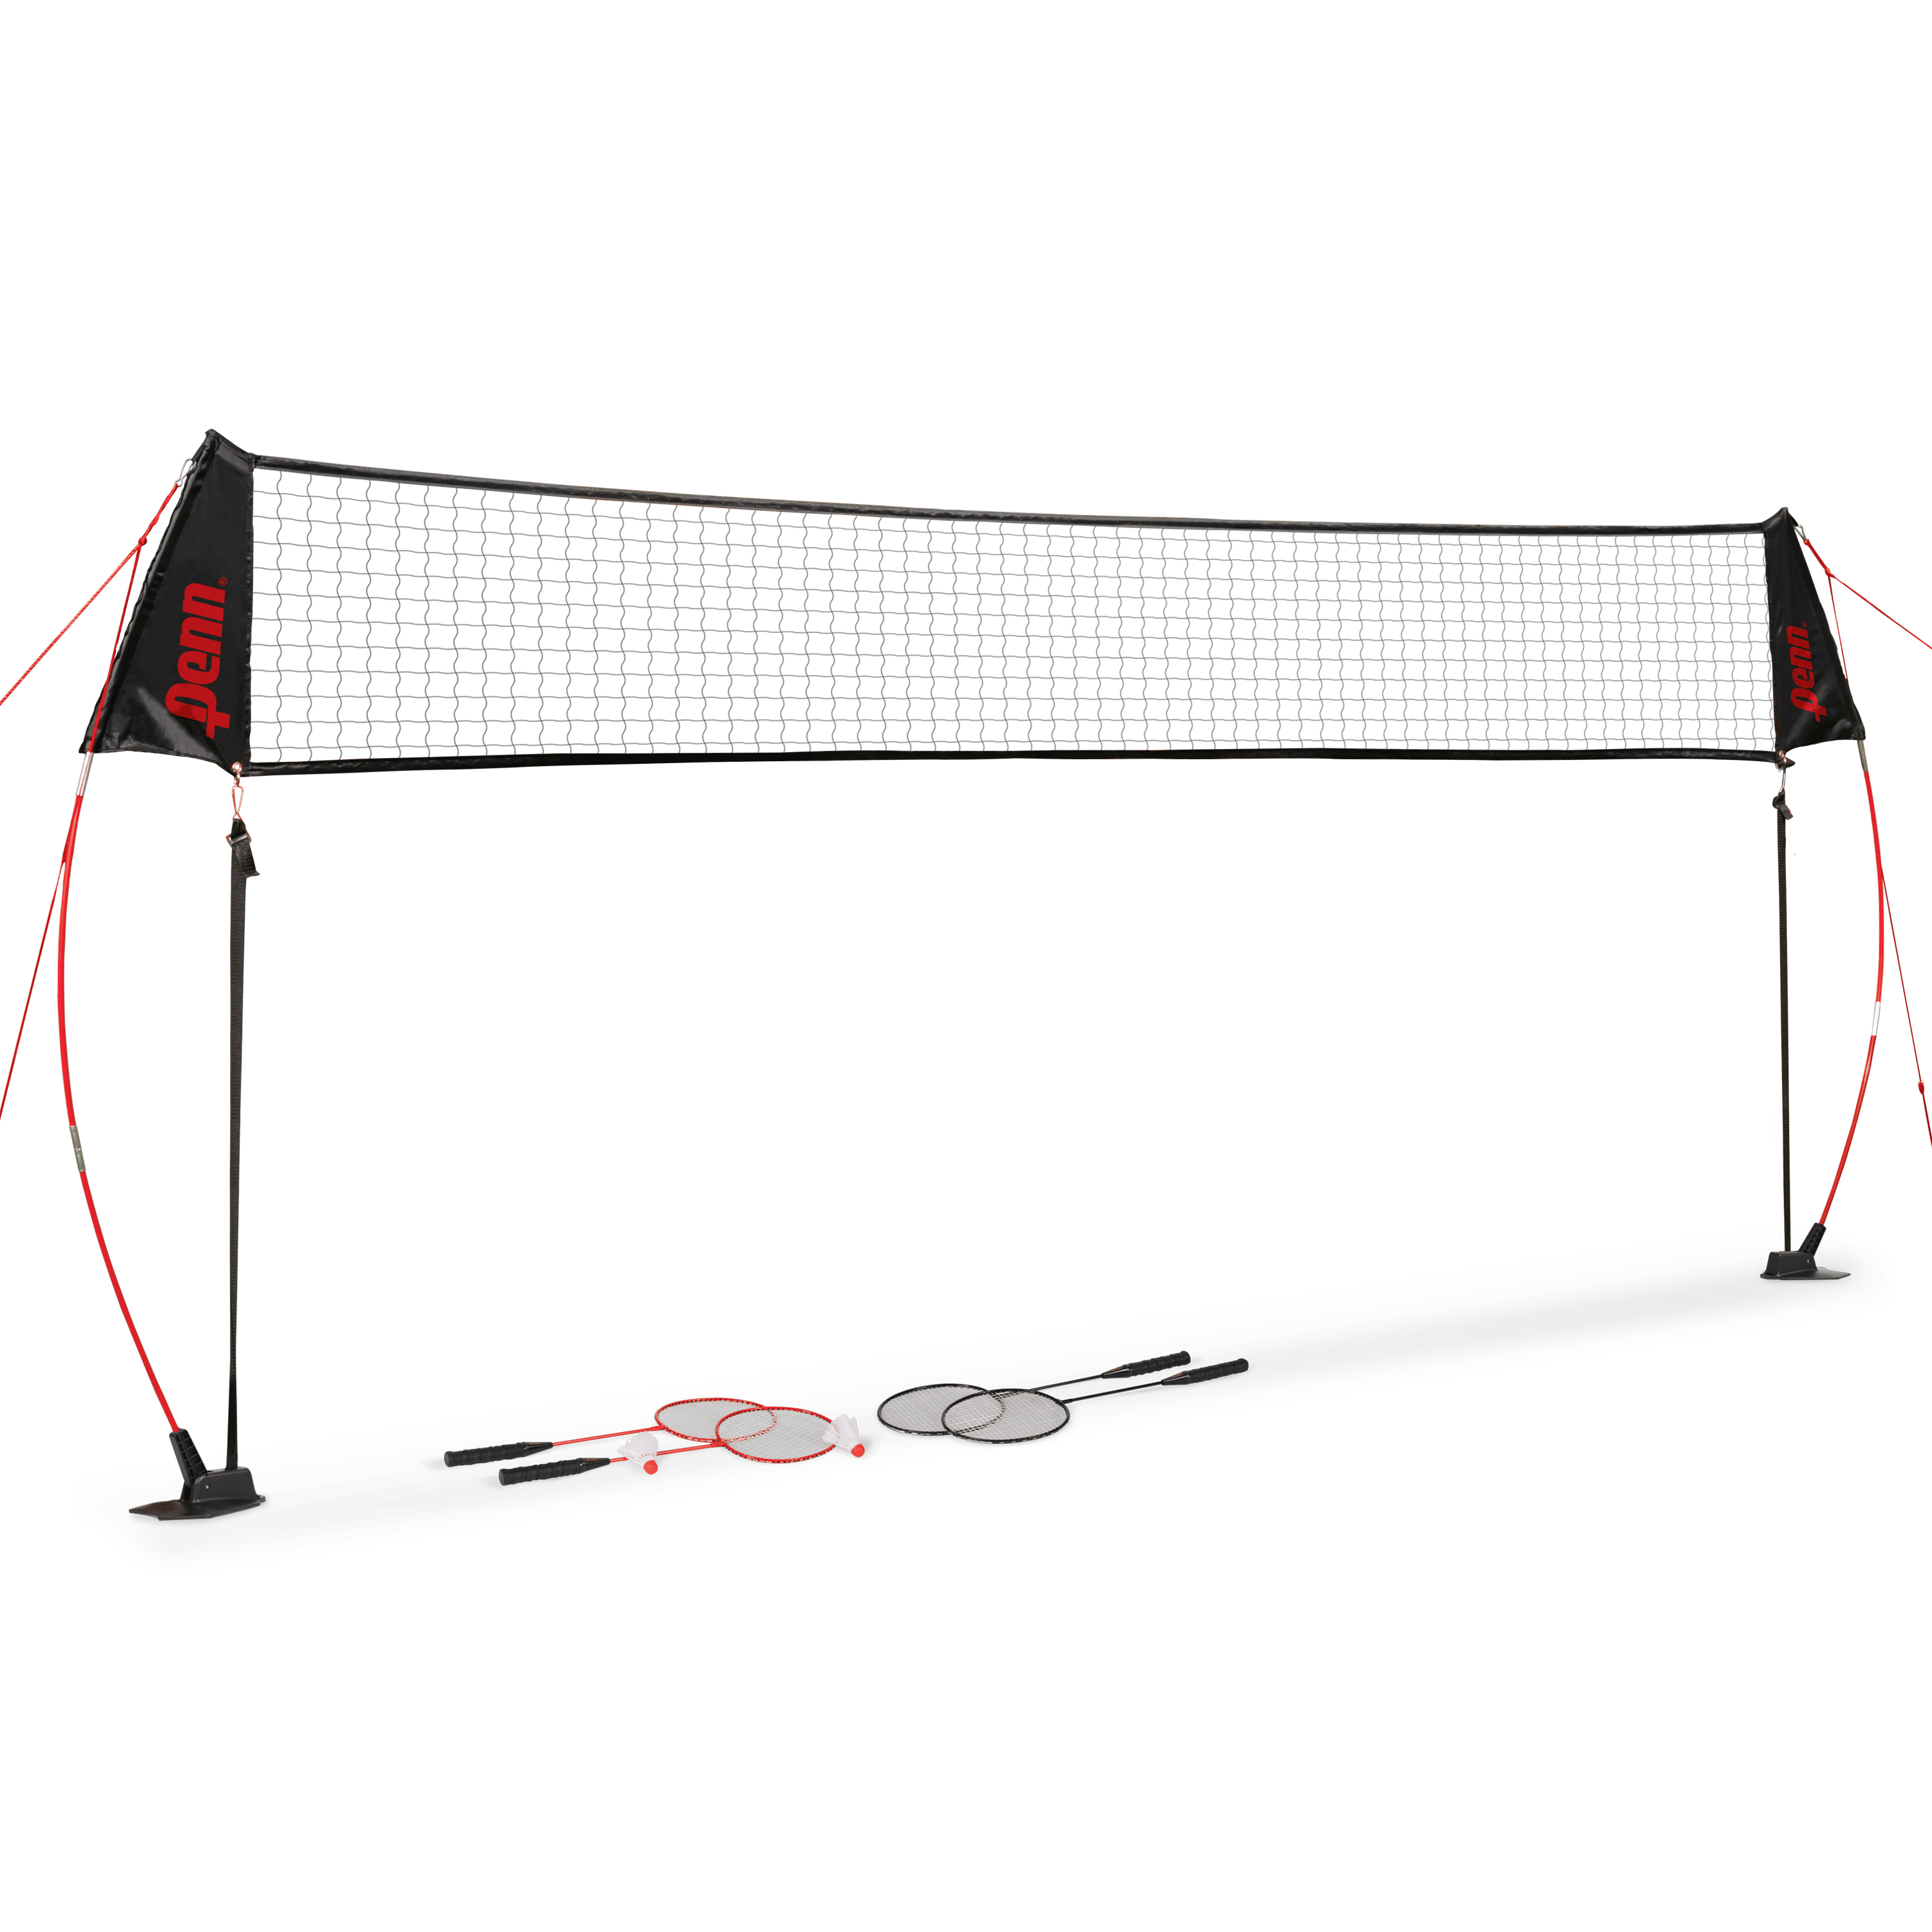 Penn Premium Easy Setup Badminton Set, Includes 4 Rackets and Shuttlecocks